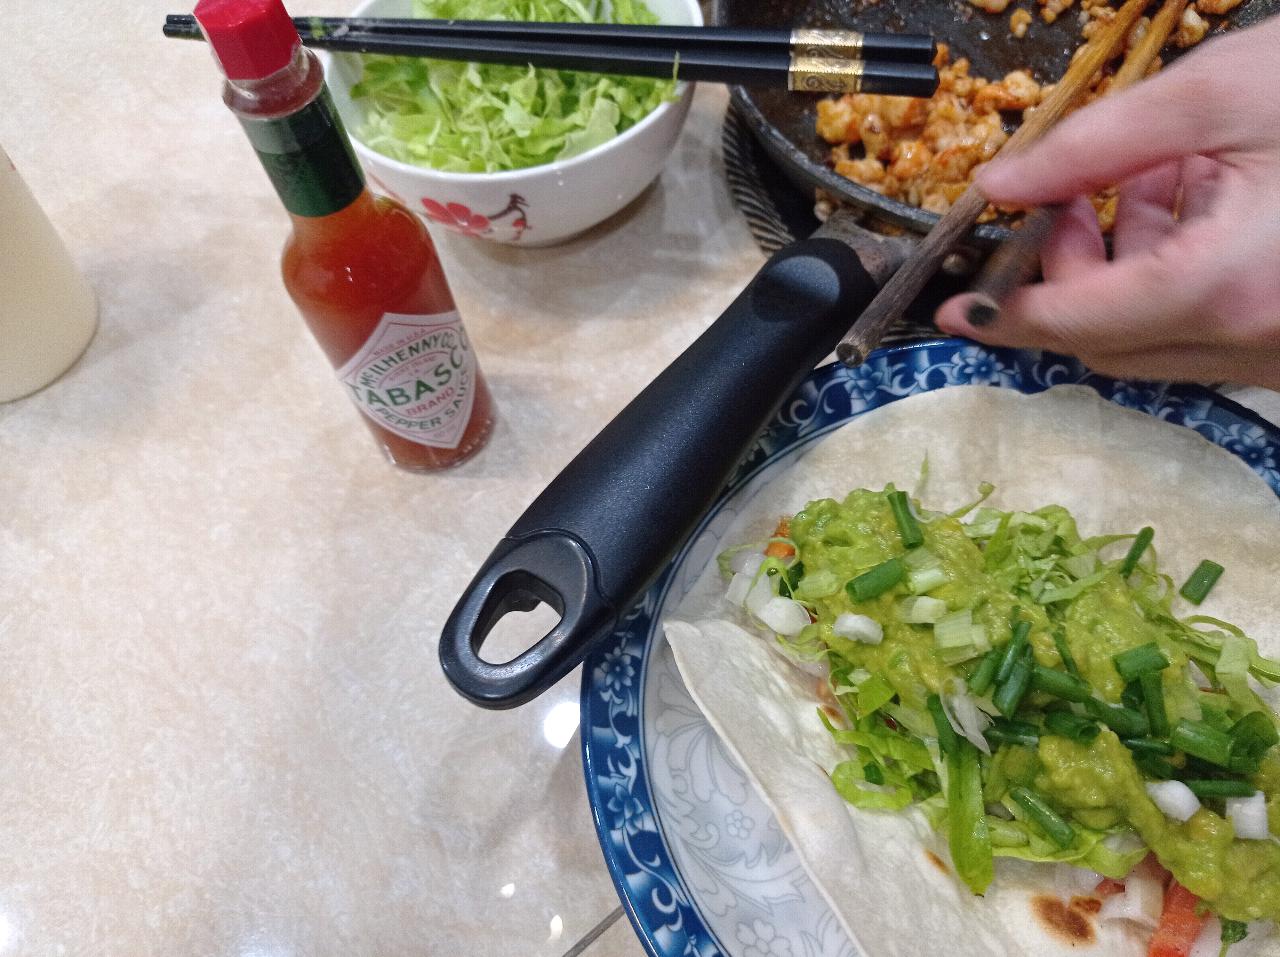 How to make organic home made #bajafresh #shrimp taco 🌮 on #tacotuesday 